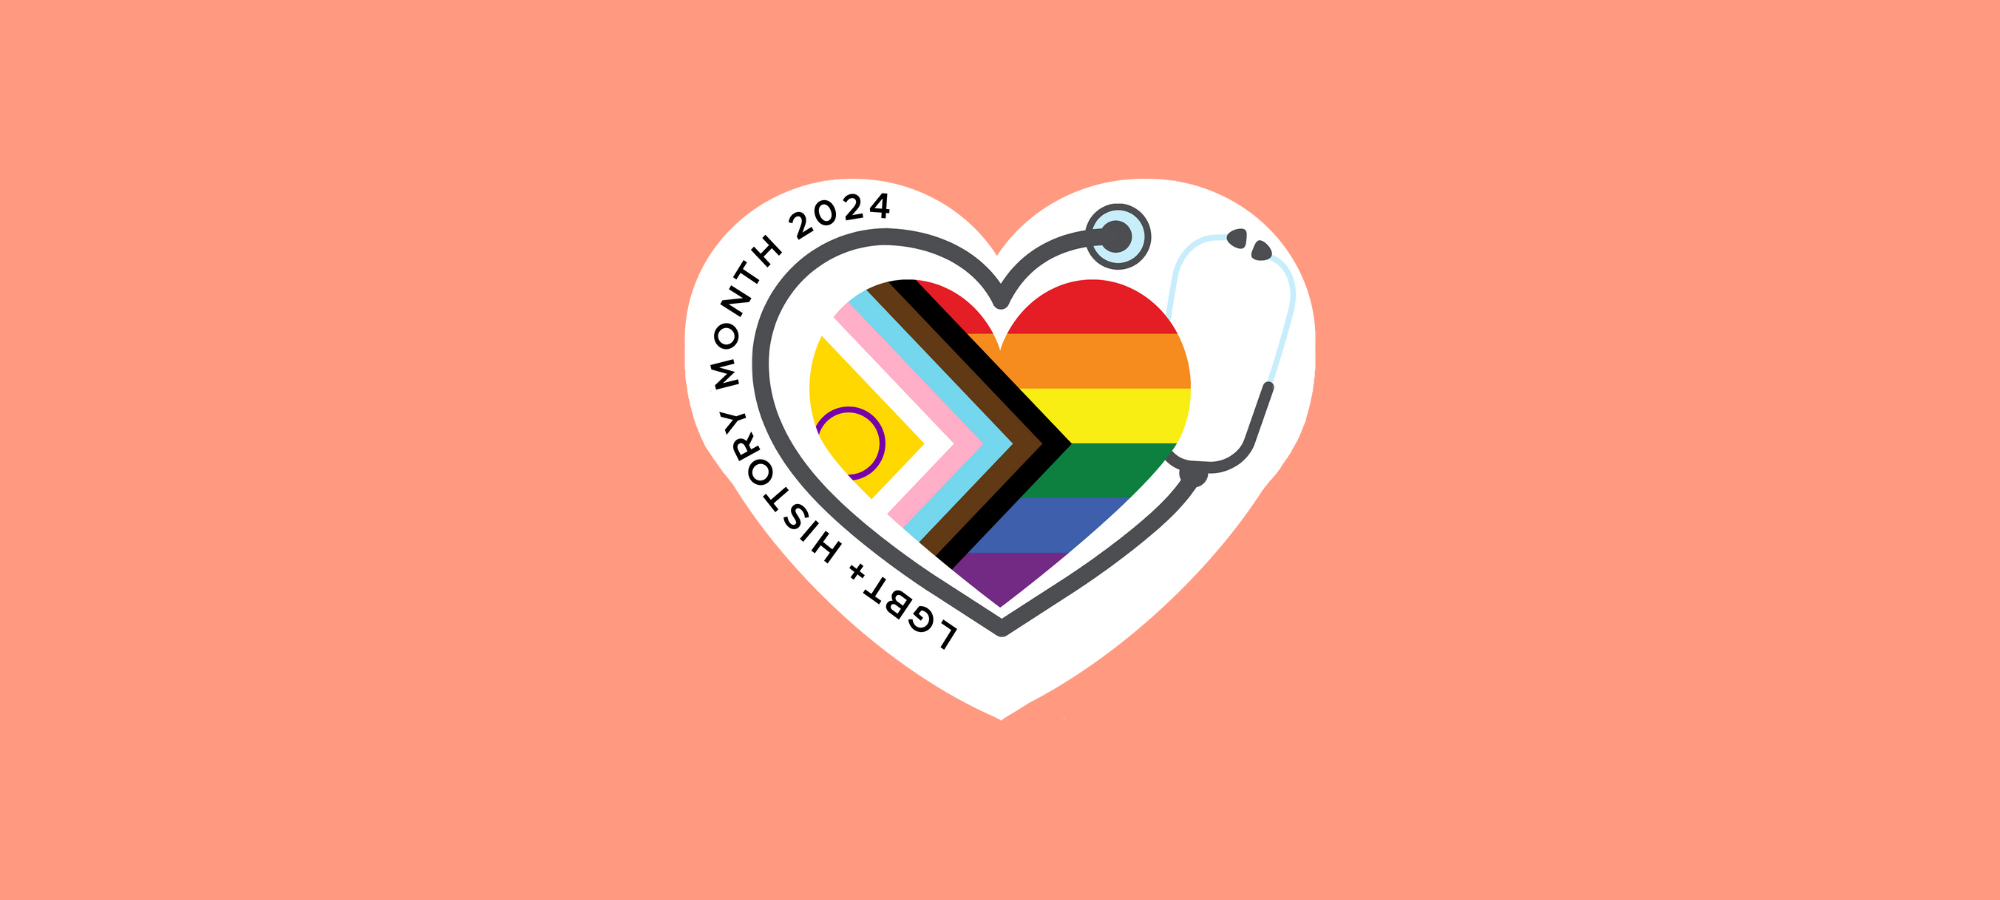 LGBT+ History Month 2024